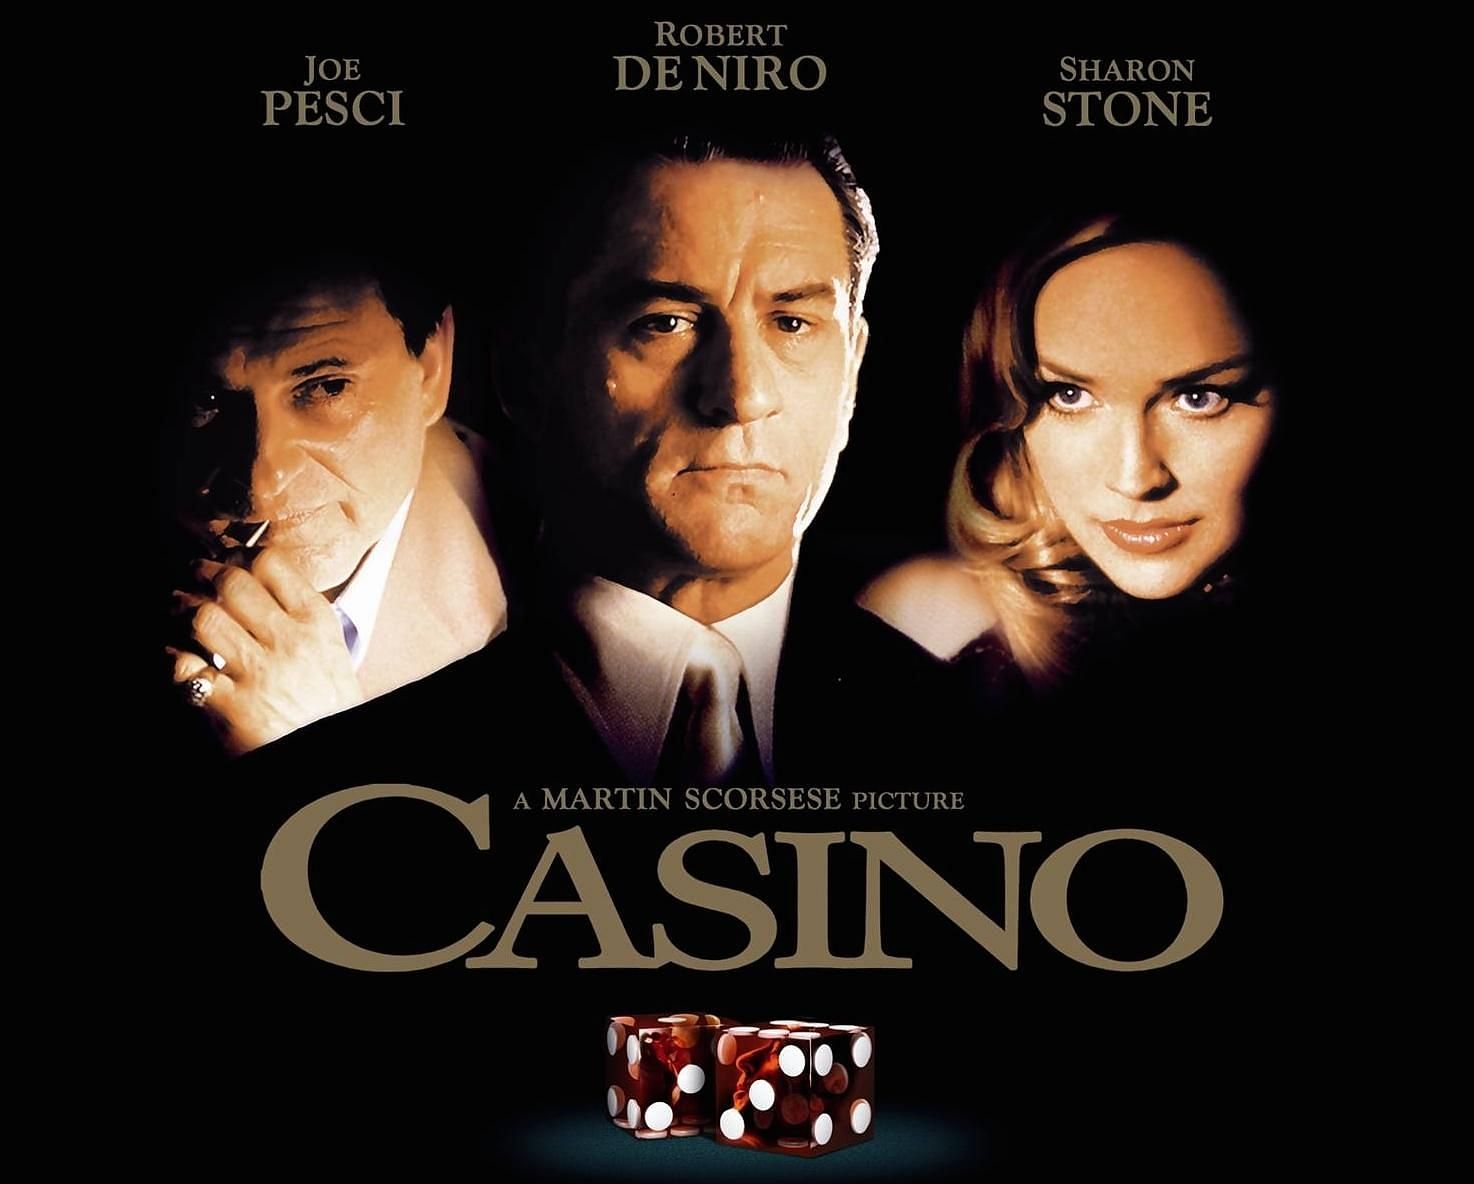 Casino (Image via Unviersal Pictures)